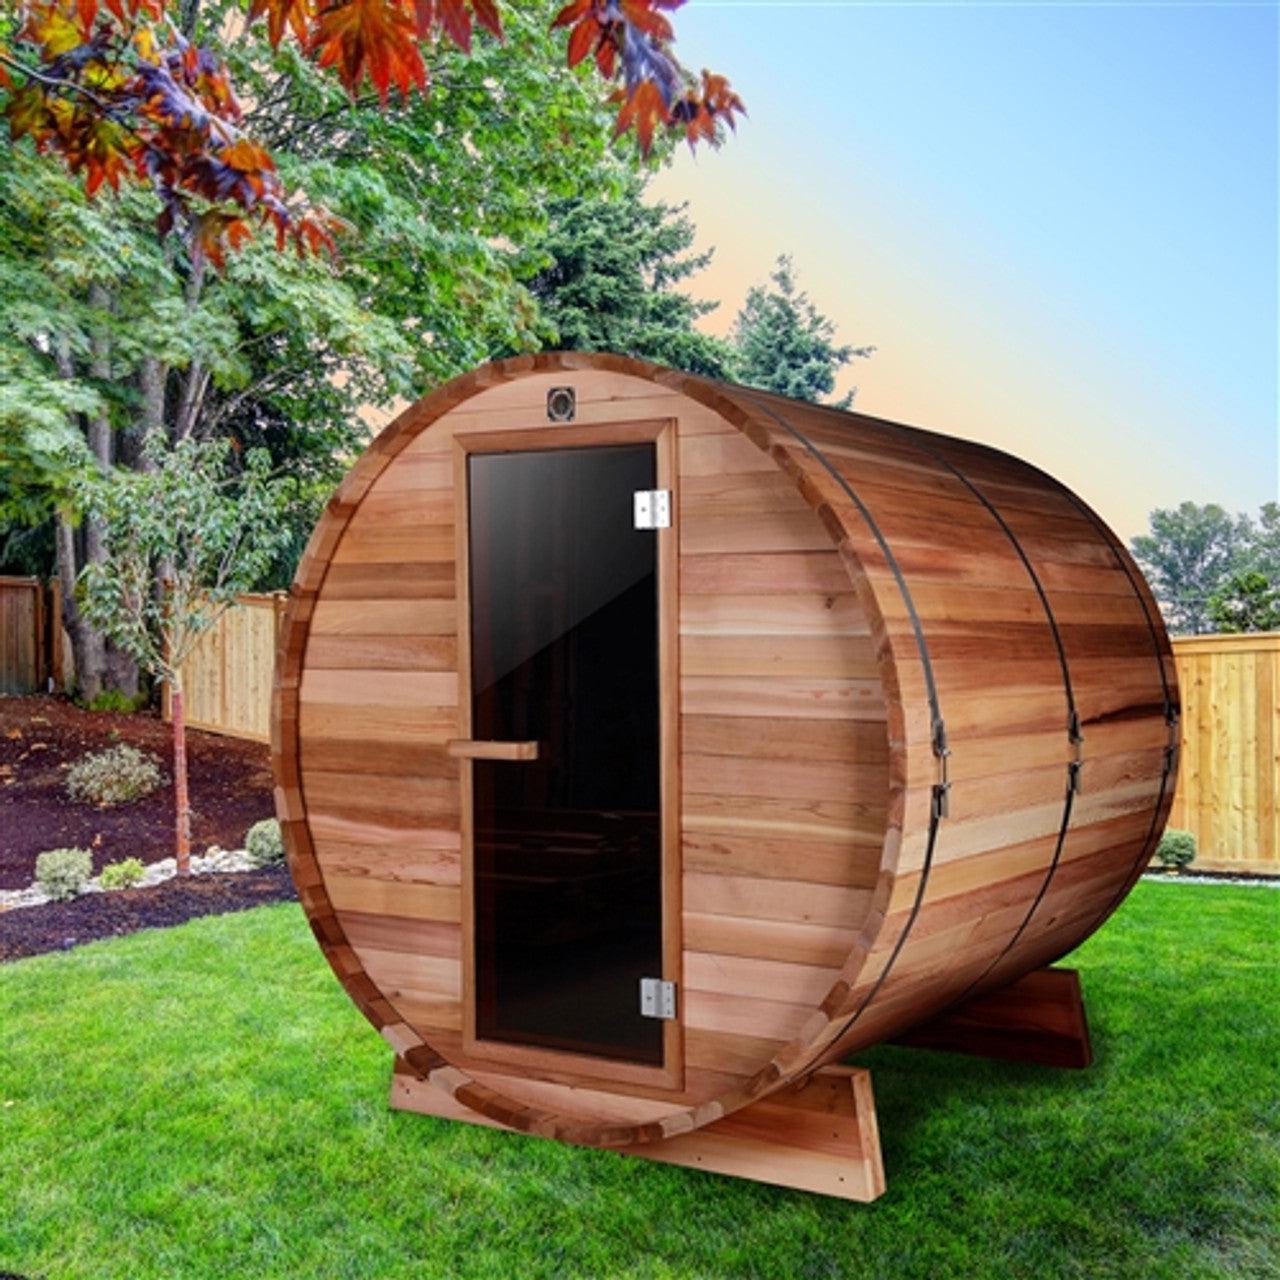 ALEKO Outdoor and Indoor 4 Person Rustic Western Red Cedar Barrel Sauna With Heater - SB4CEDAR-AP - Purely Relaxation